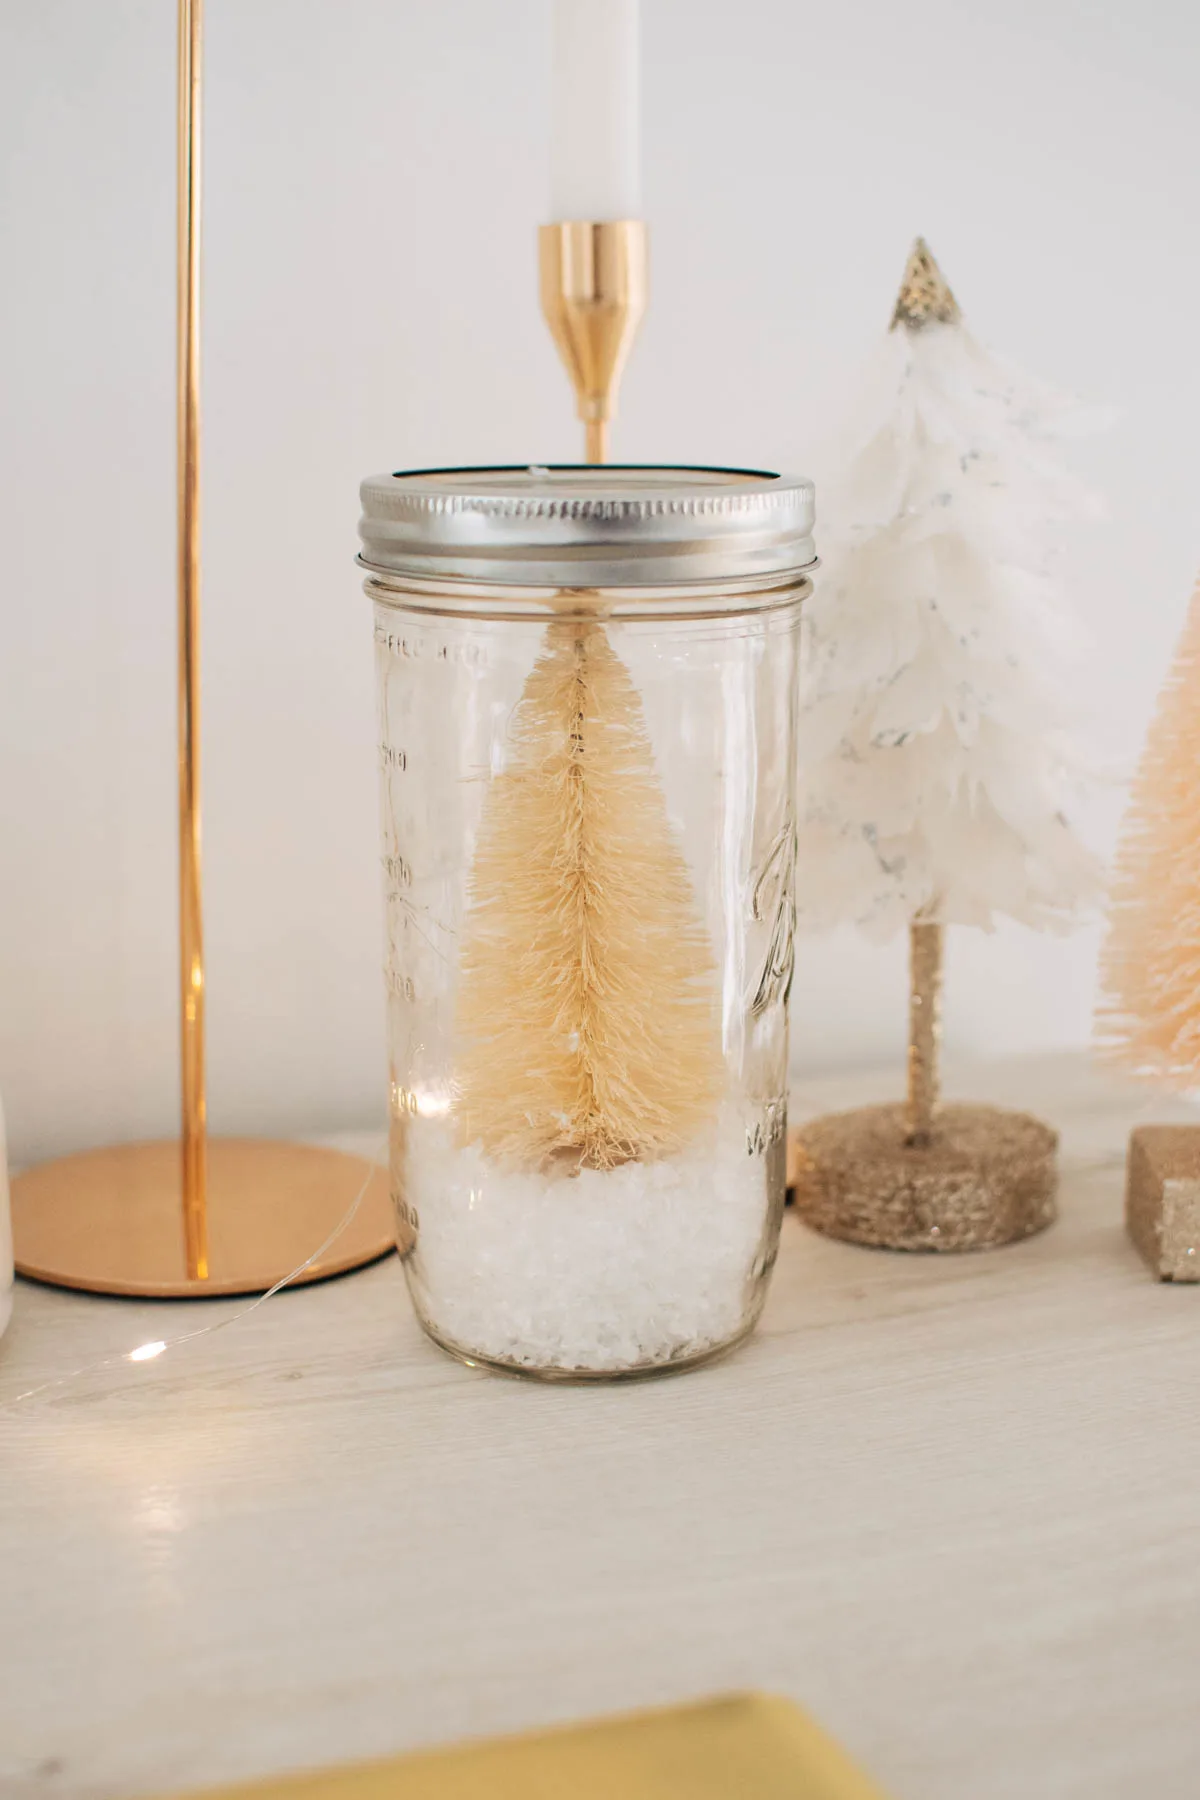 Cream bottle brush tree and fake snow in Mason jar next to gold candlesticks on cream cabinet.